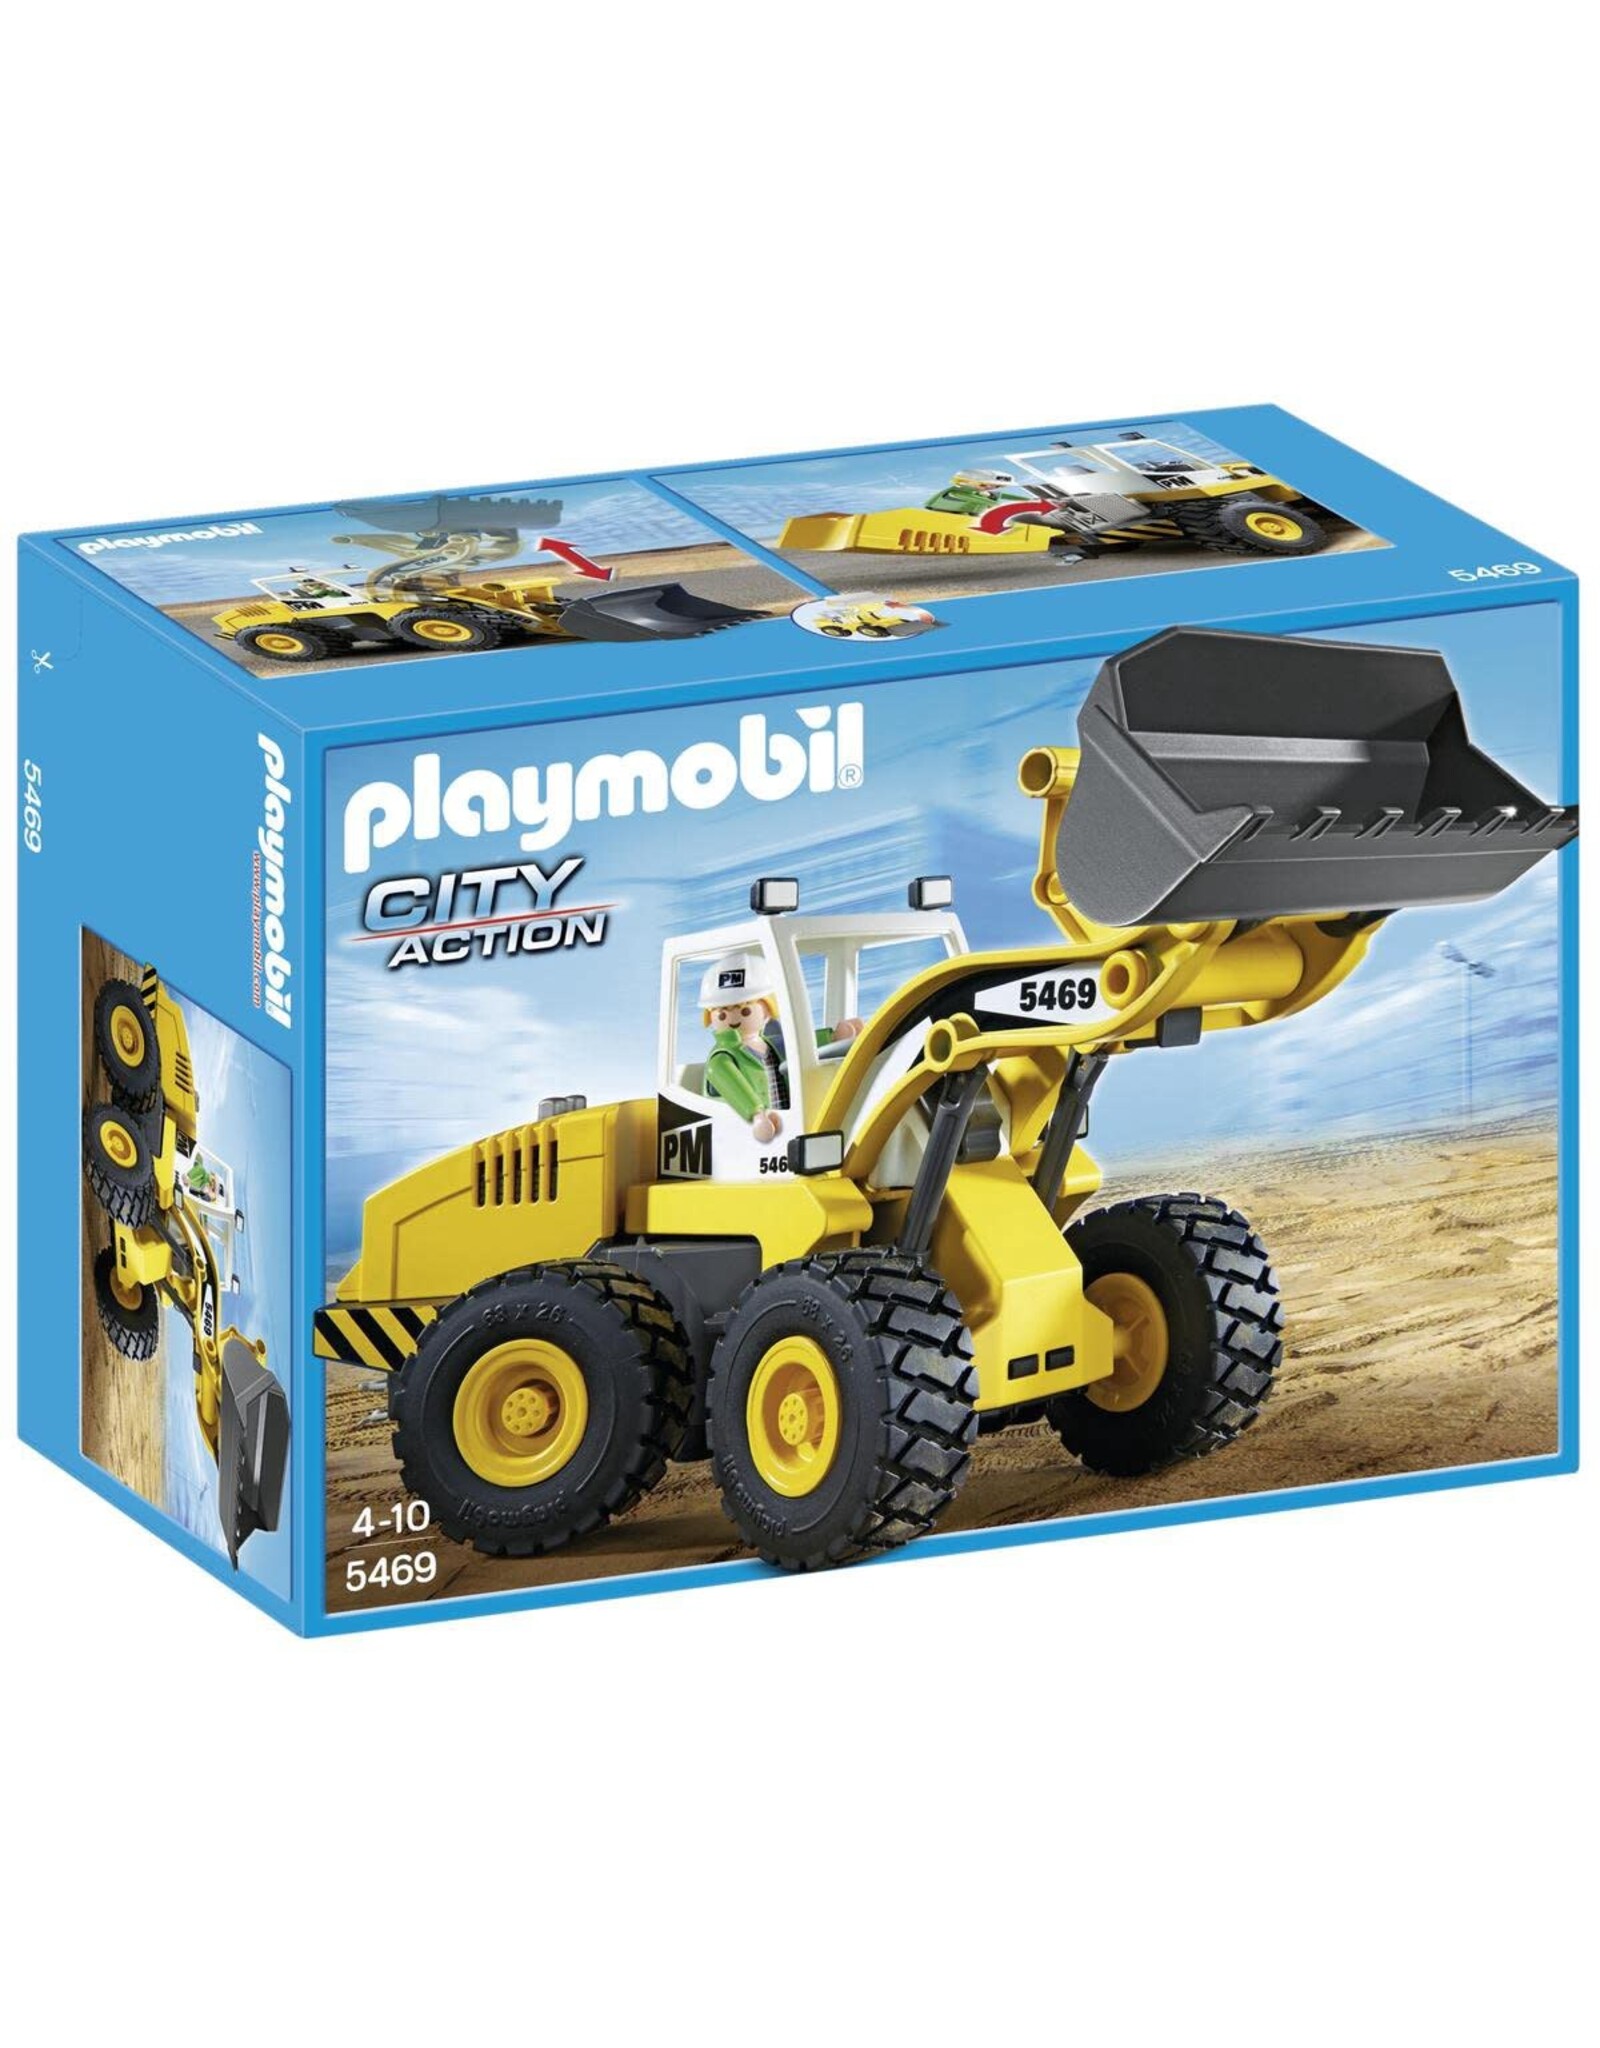 Playmobil Playmobil City Action 5469 Bulldozer